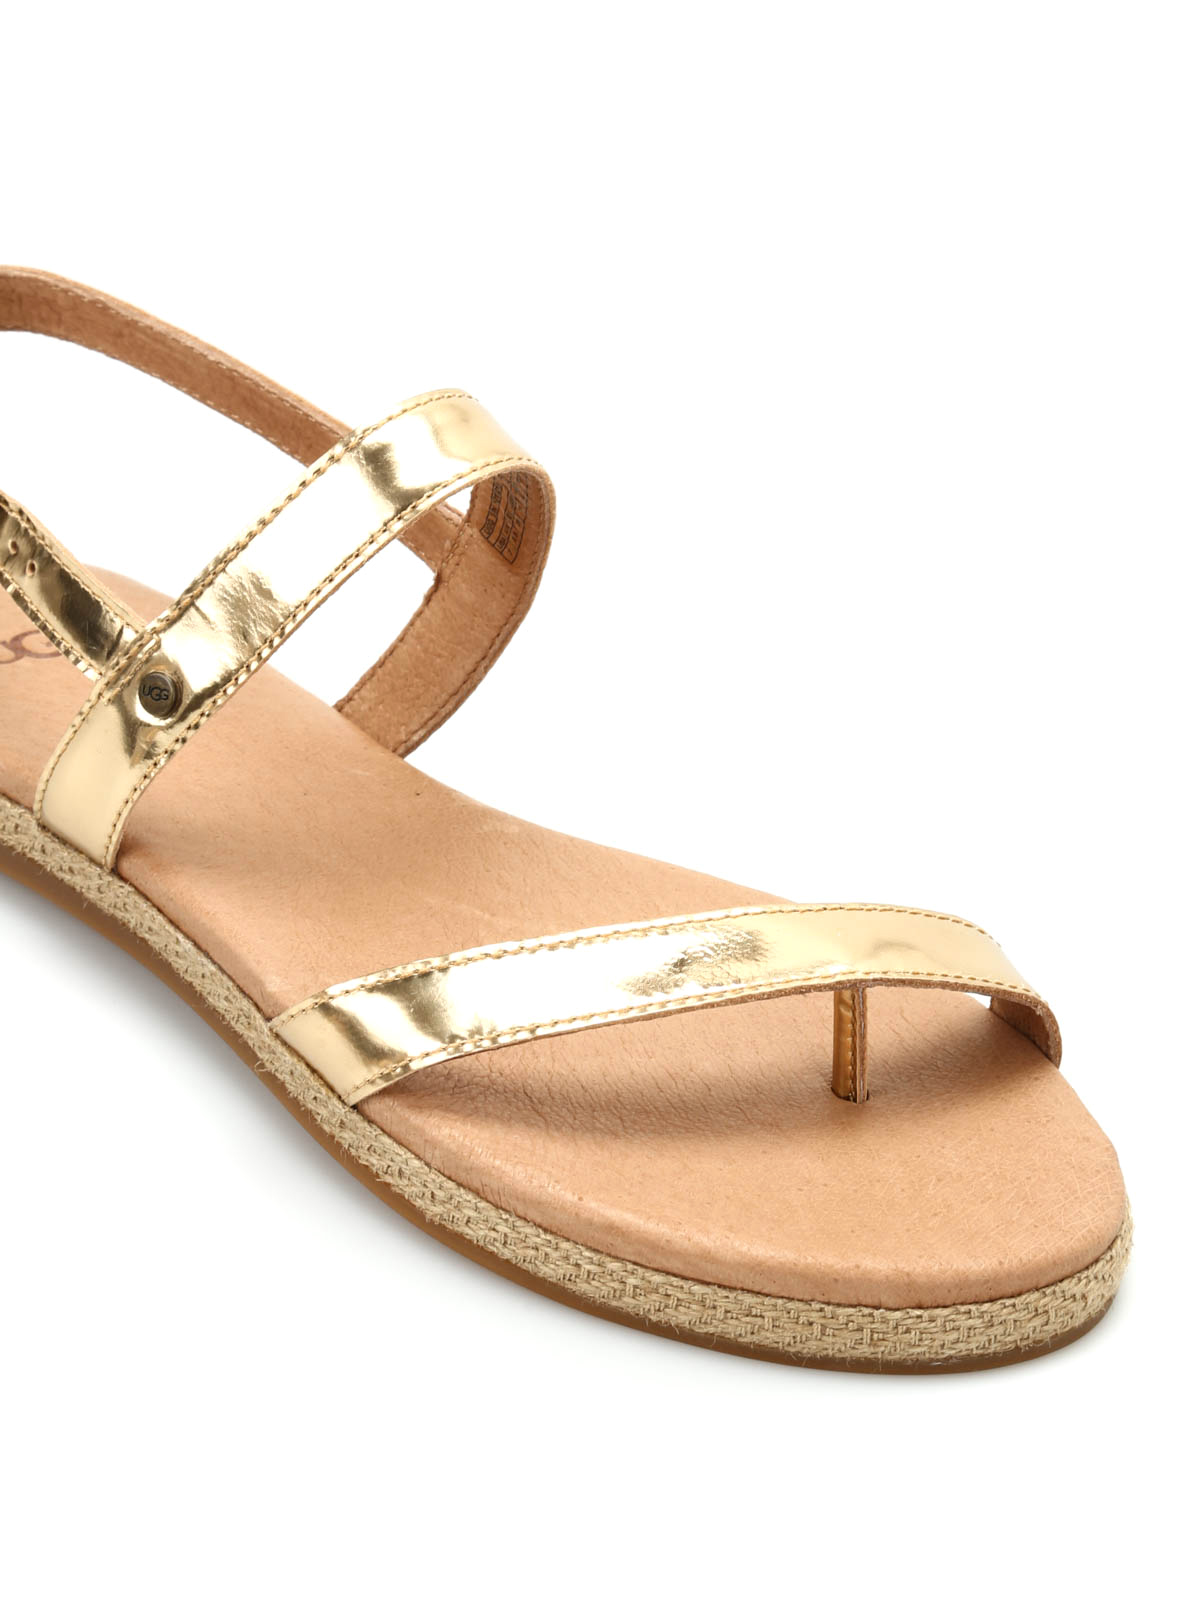 Sandals Ugg - Brylee patent leather sandals - 1011219 | iKRIX.com